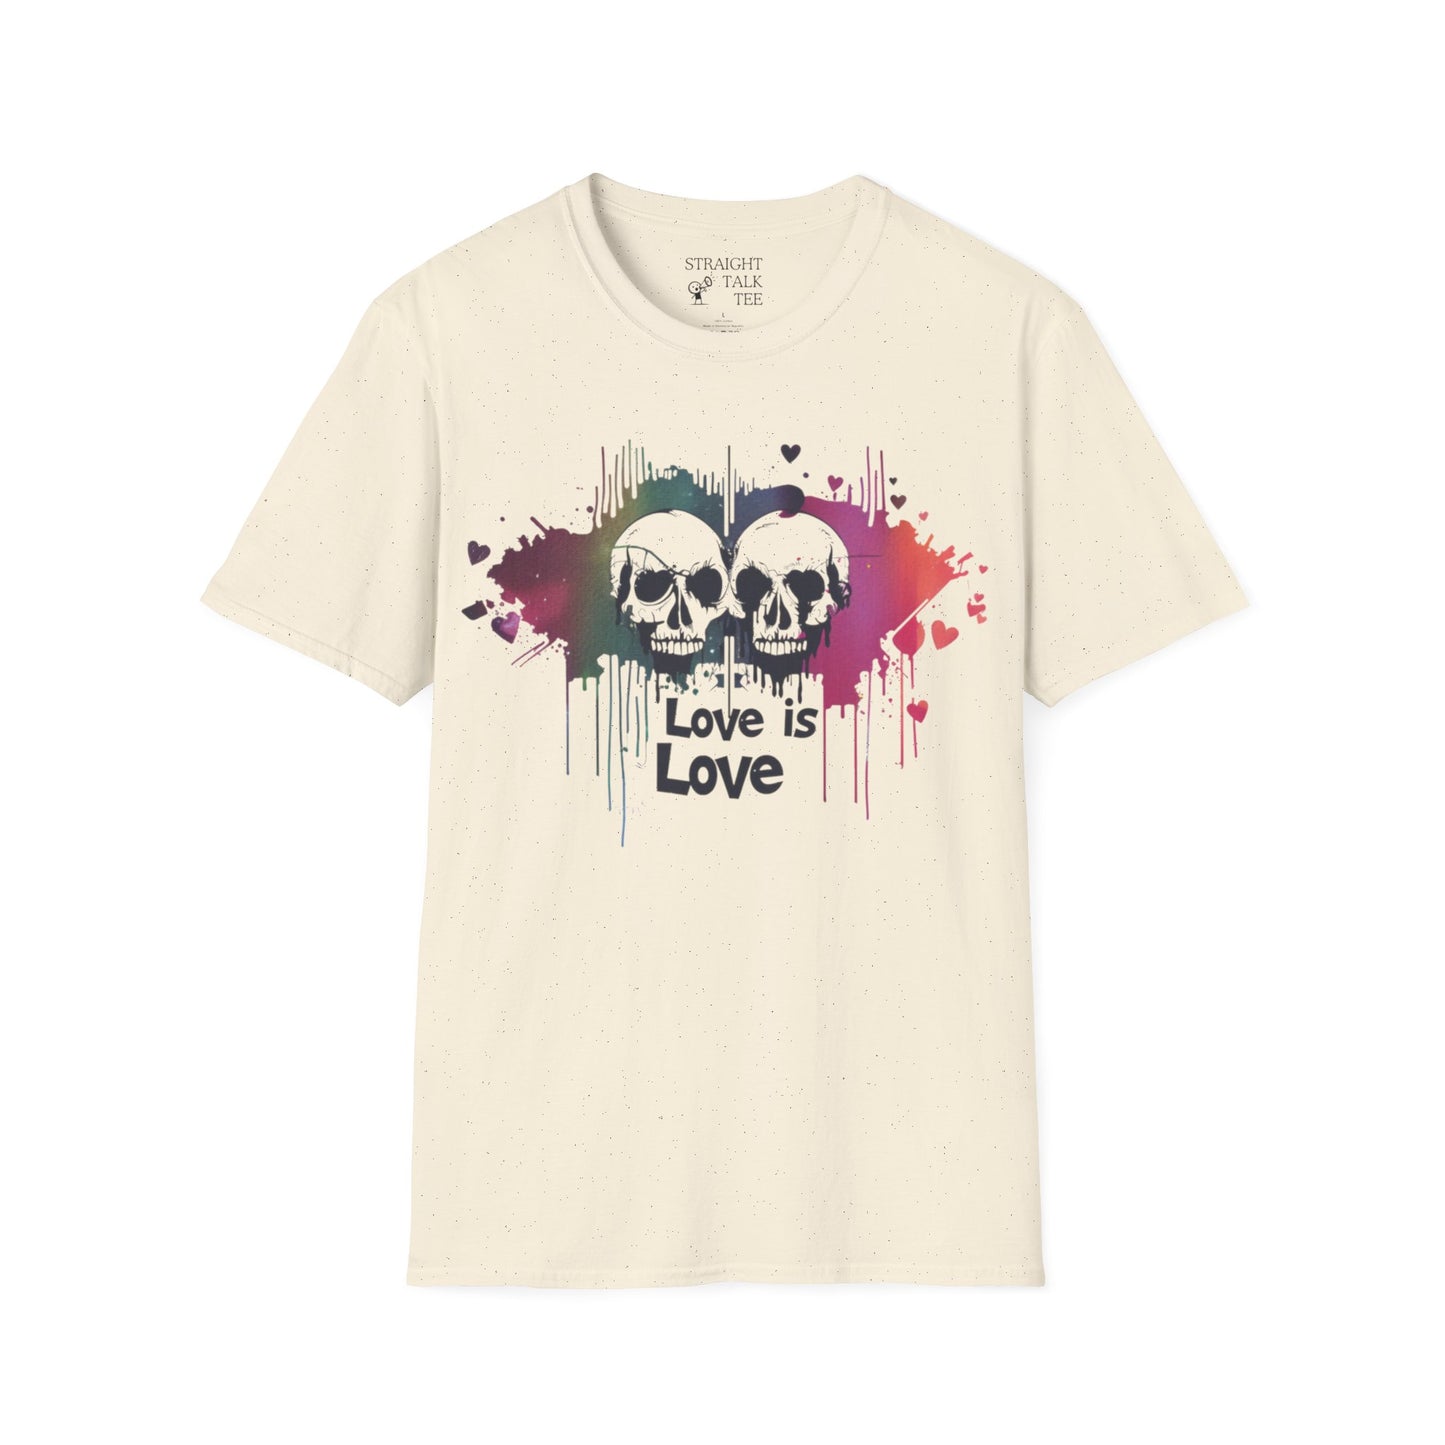 Love is Love Pride T-Shirt Political Skull Shirt Protest Punk Activism tshirt Statement Equality tee Leftist Liberal Shirt Vote